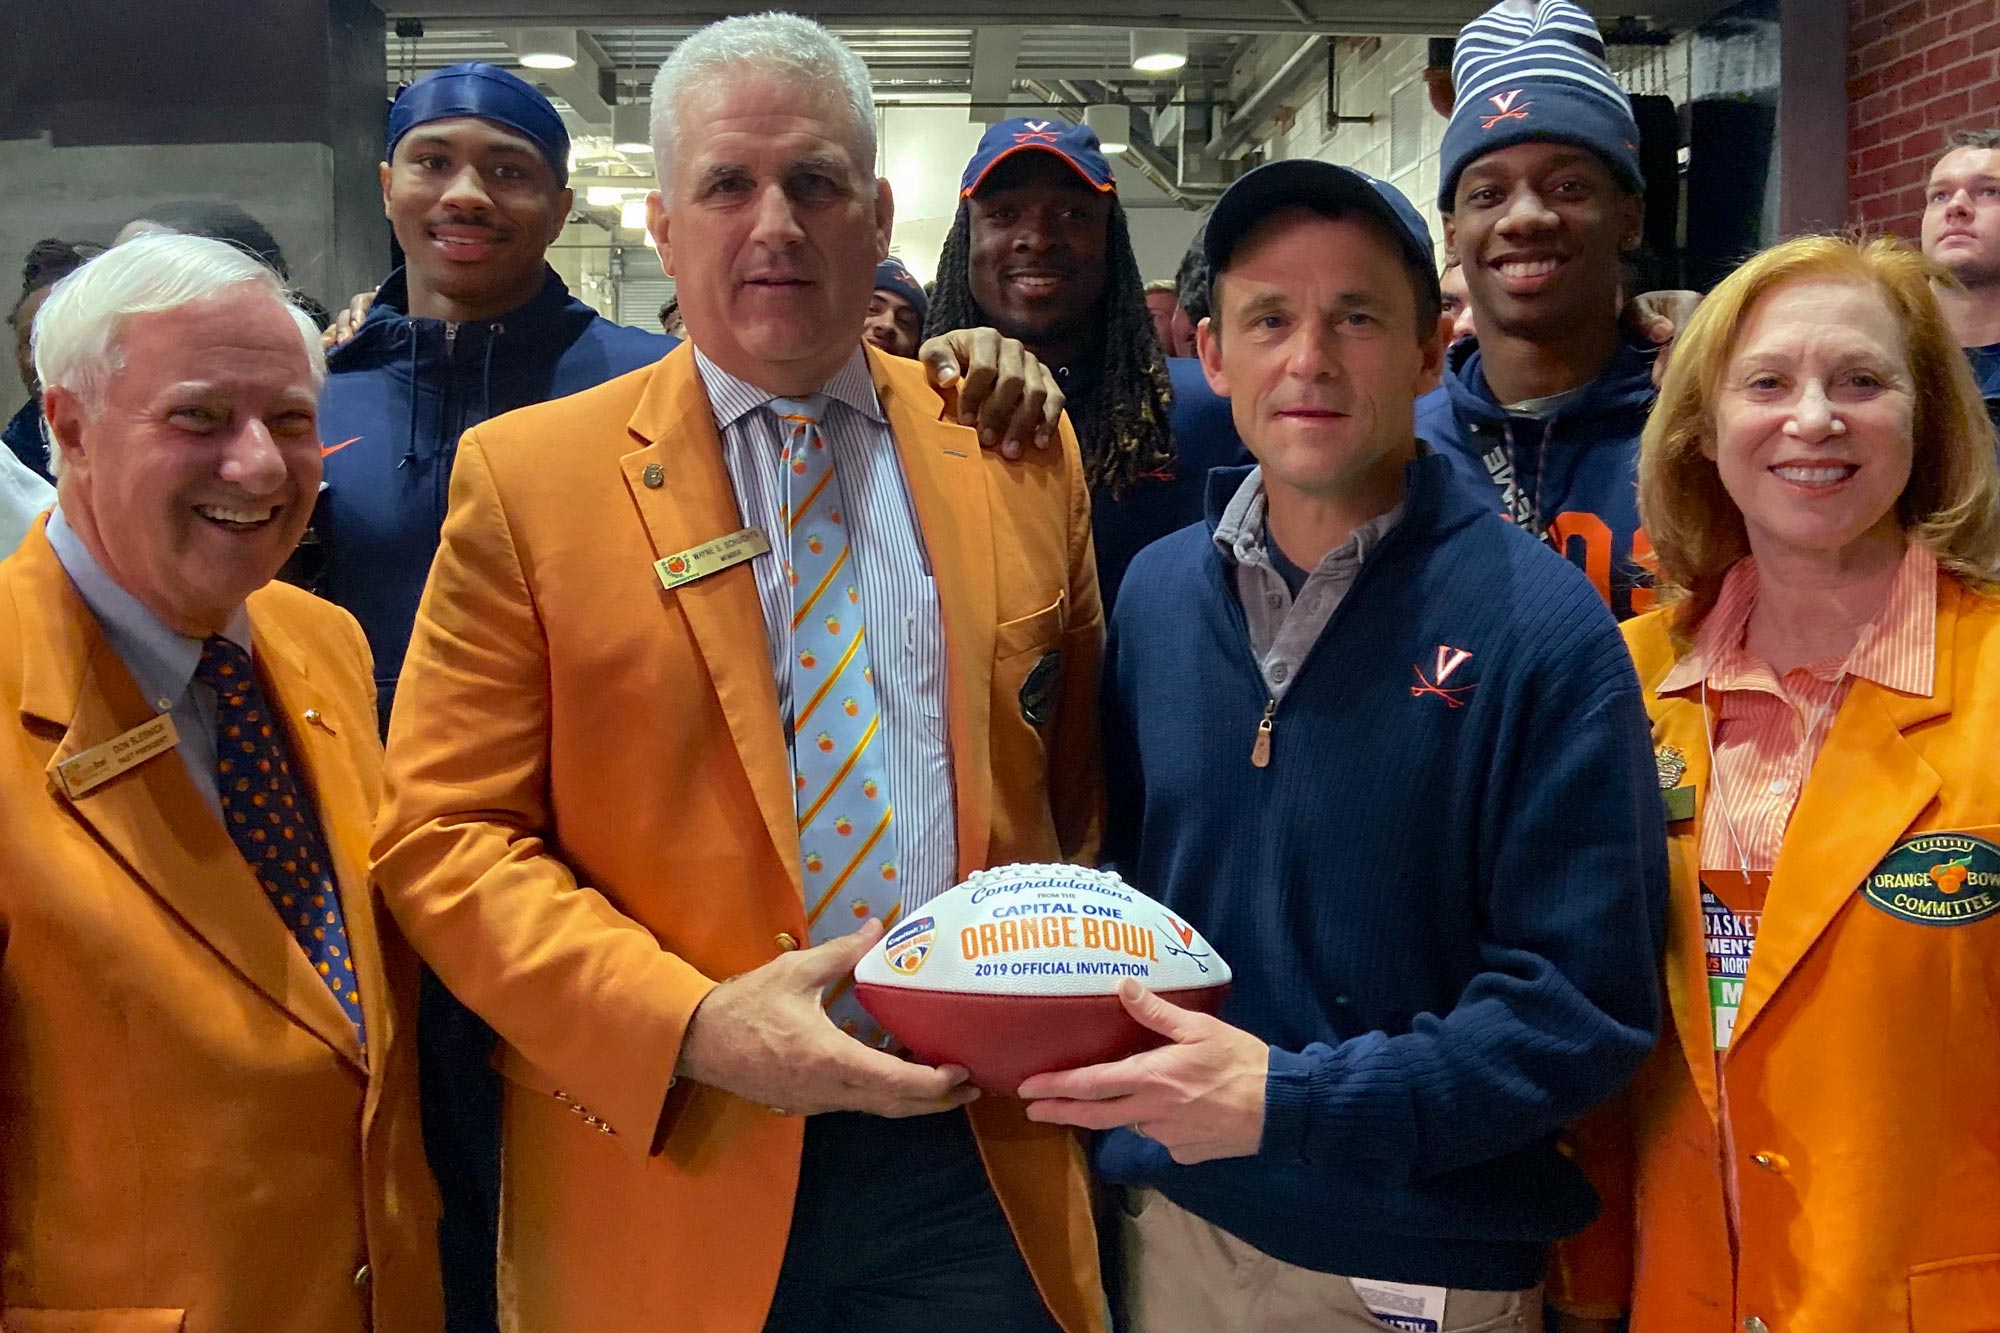 Wayne Schuchts with President Jim Ryan and orange bowl staff and UVA students hold the Orange Bowl football